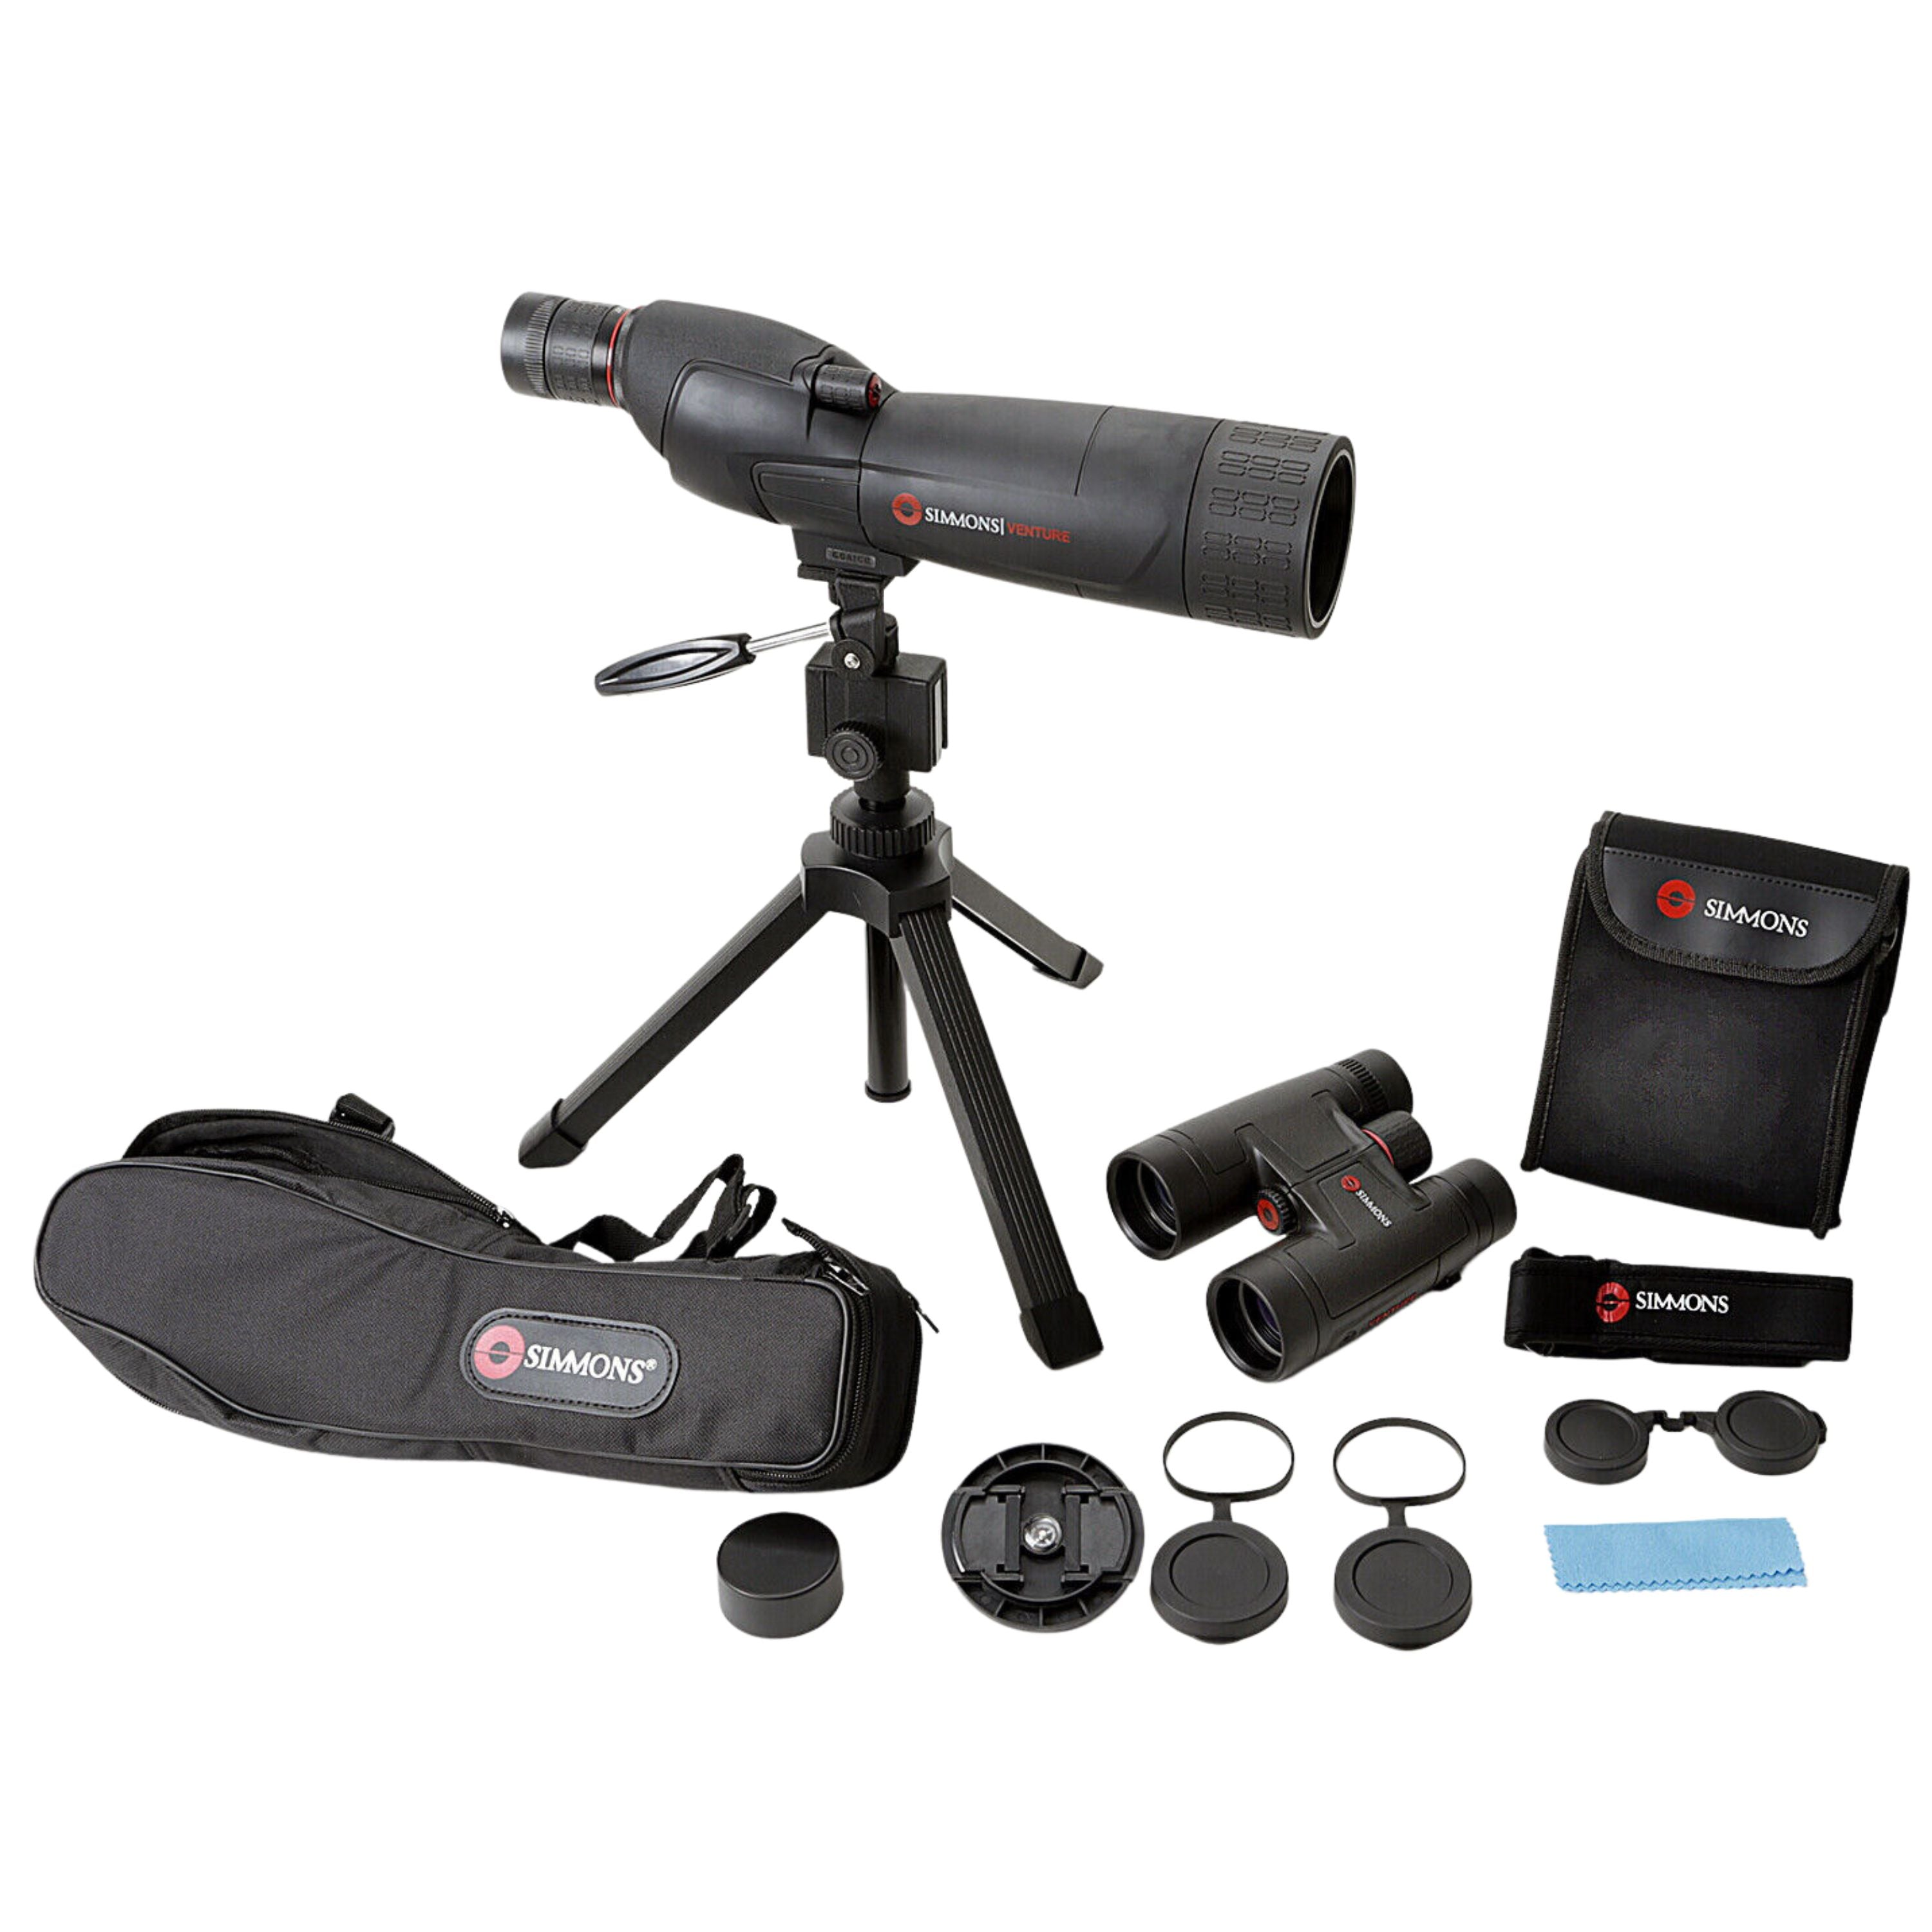 Combo jumelles 10x42 mm et lunette d’observation "Venture"||10x42 mm Binocular and "Venture" Spotting scope combo